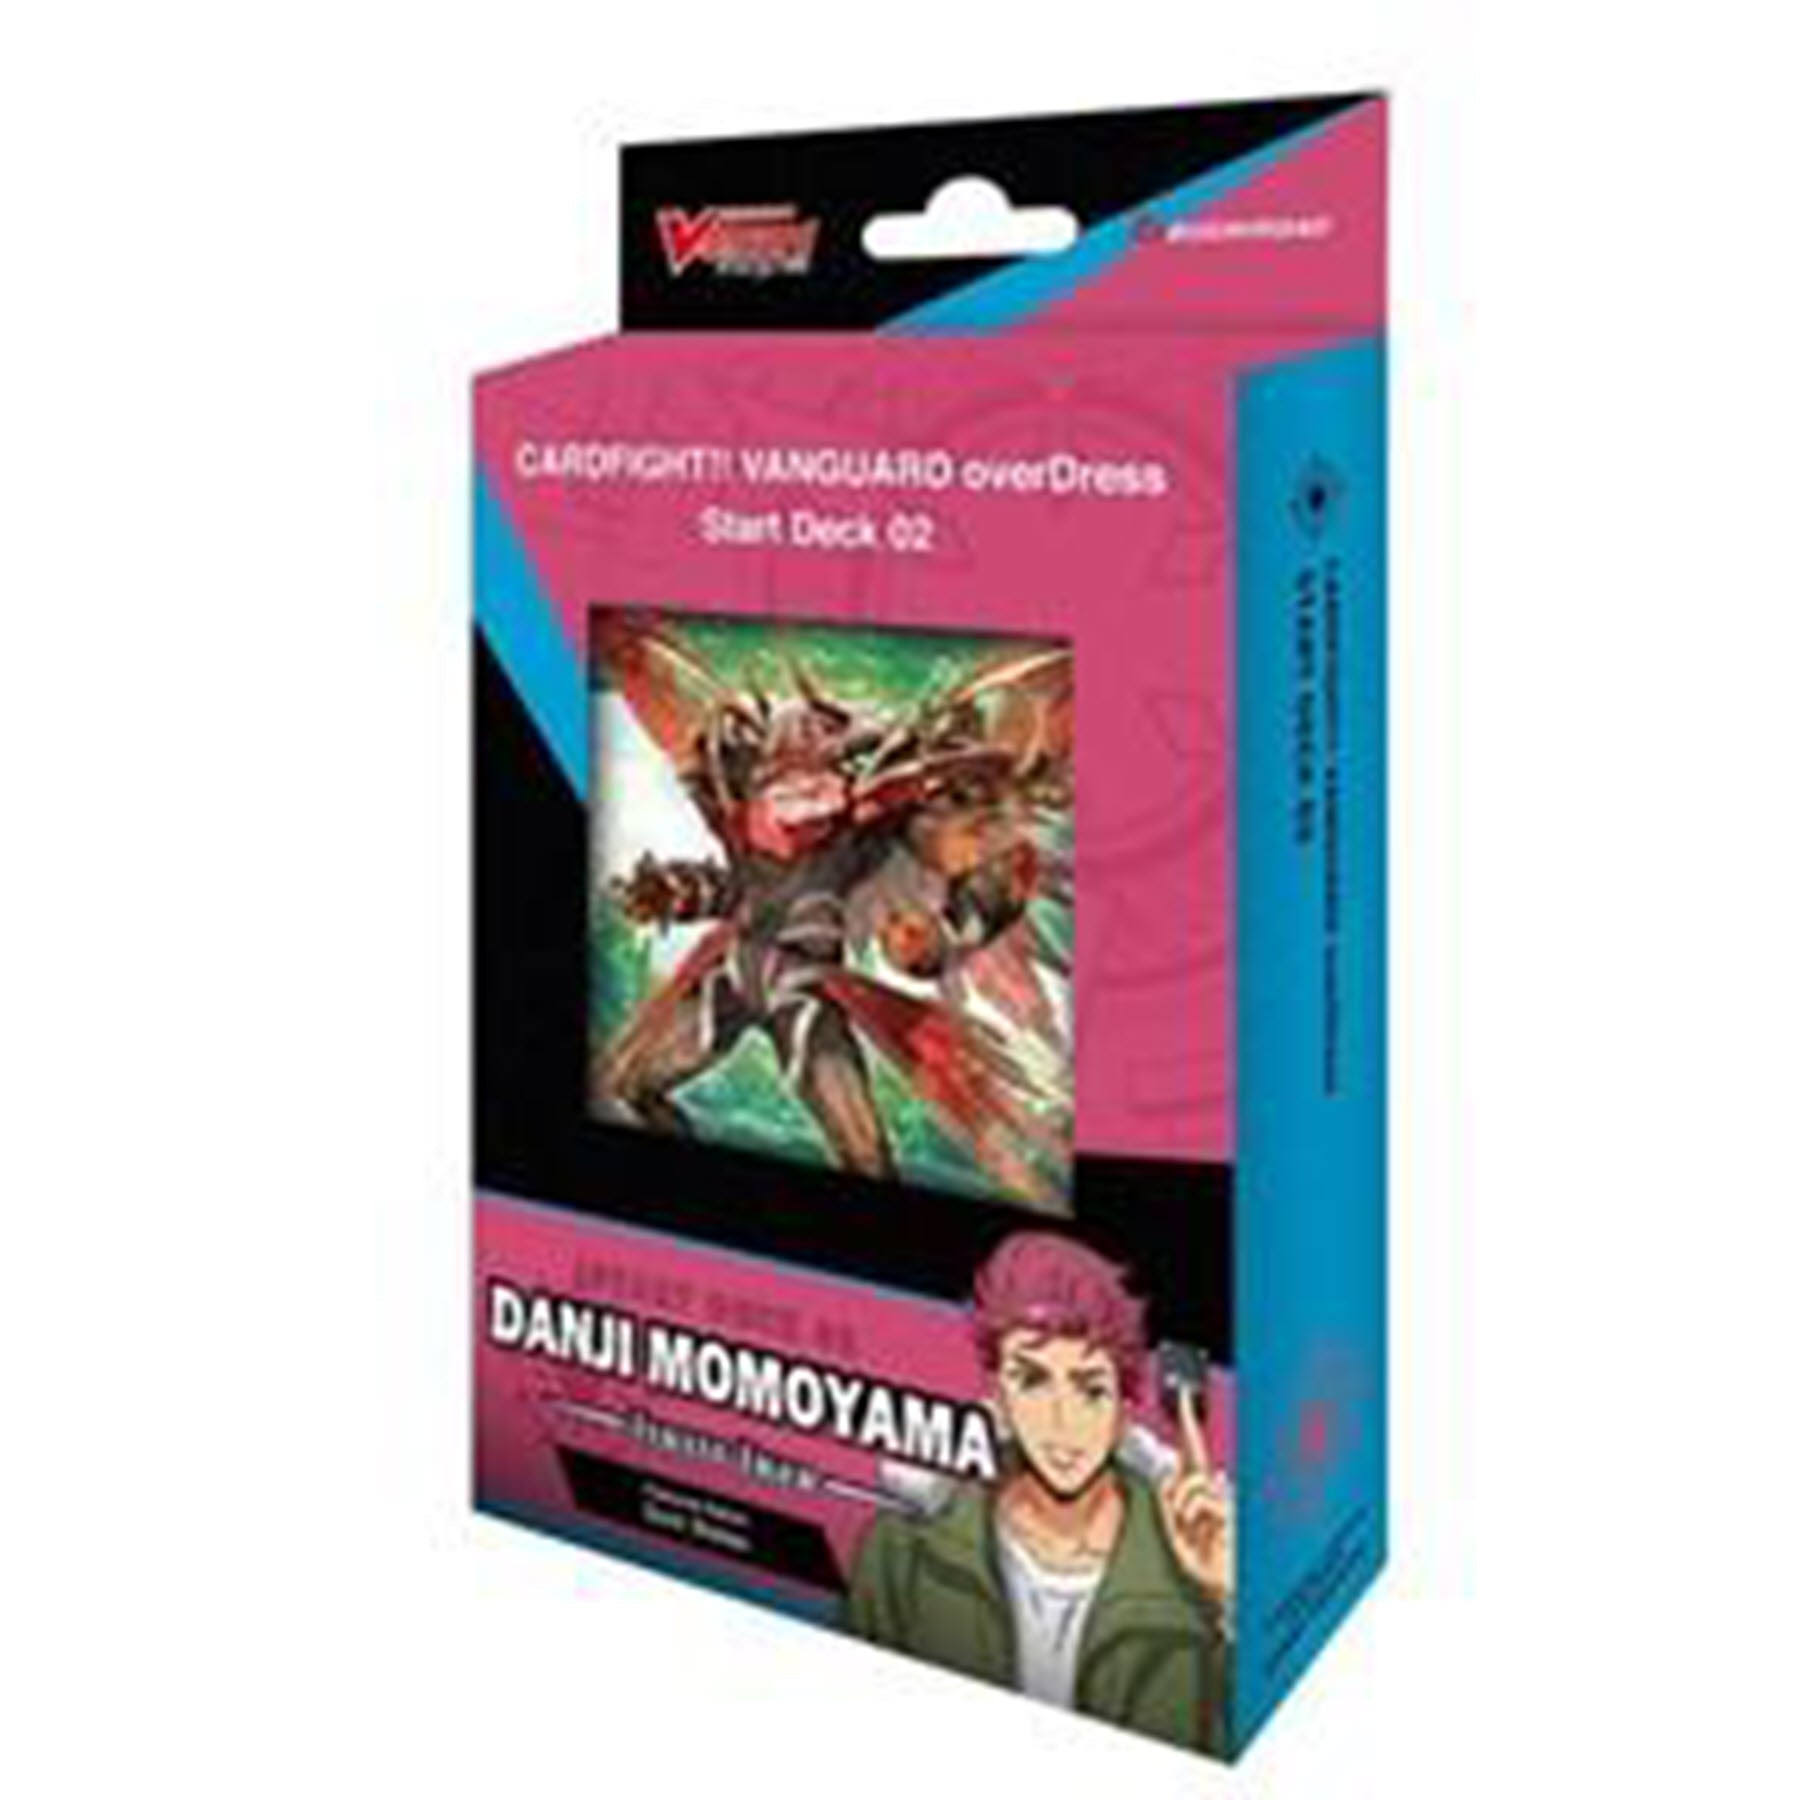 Cardfight Vanguard Overdress - Danji Momoyama -tyrant Tiger - Start Deck 02